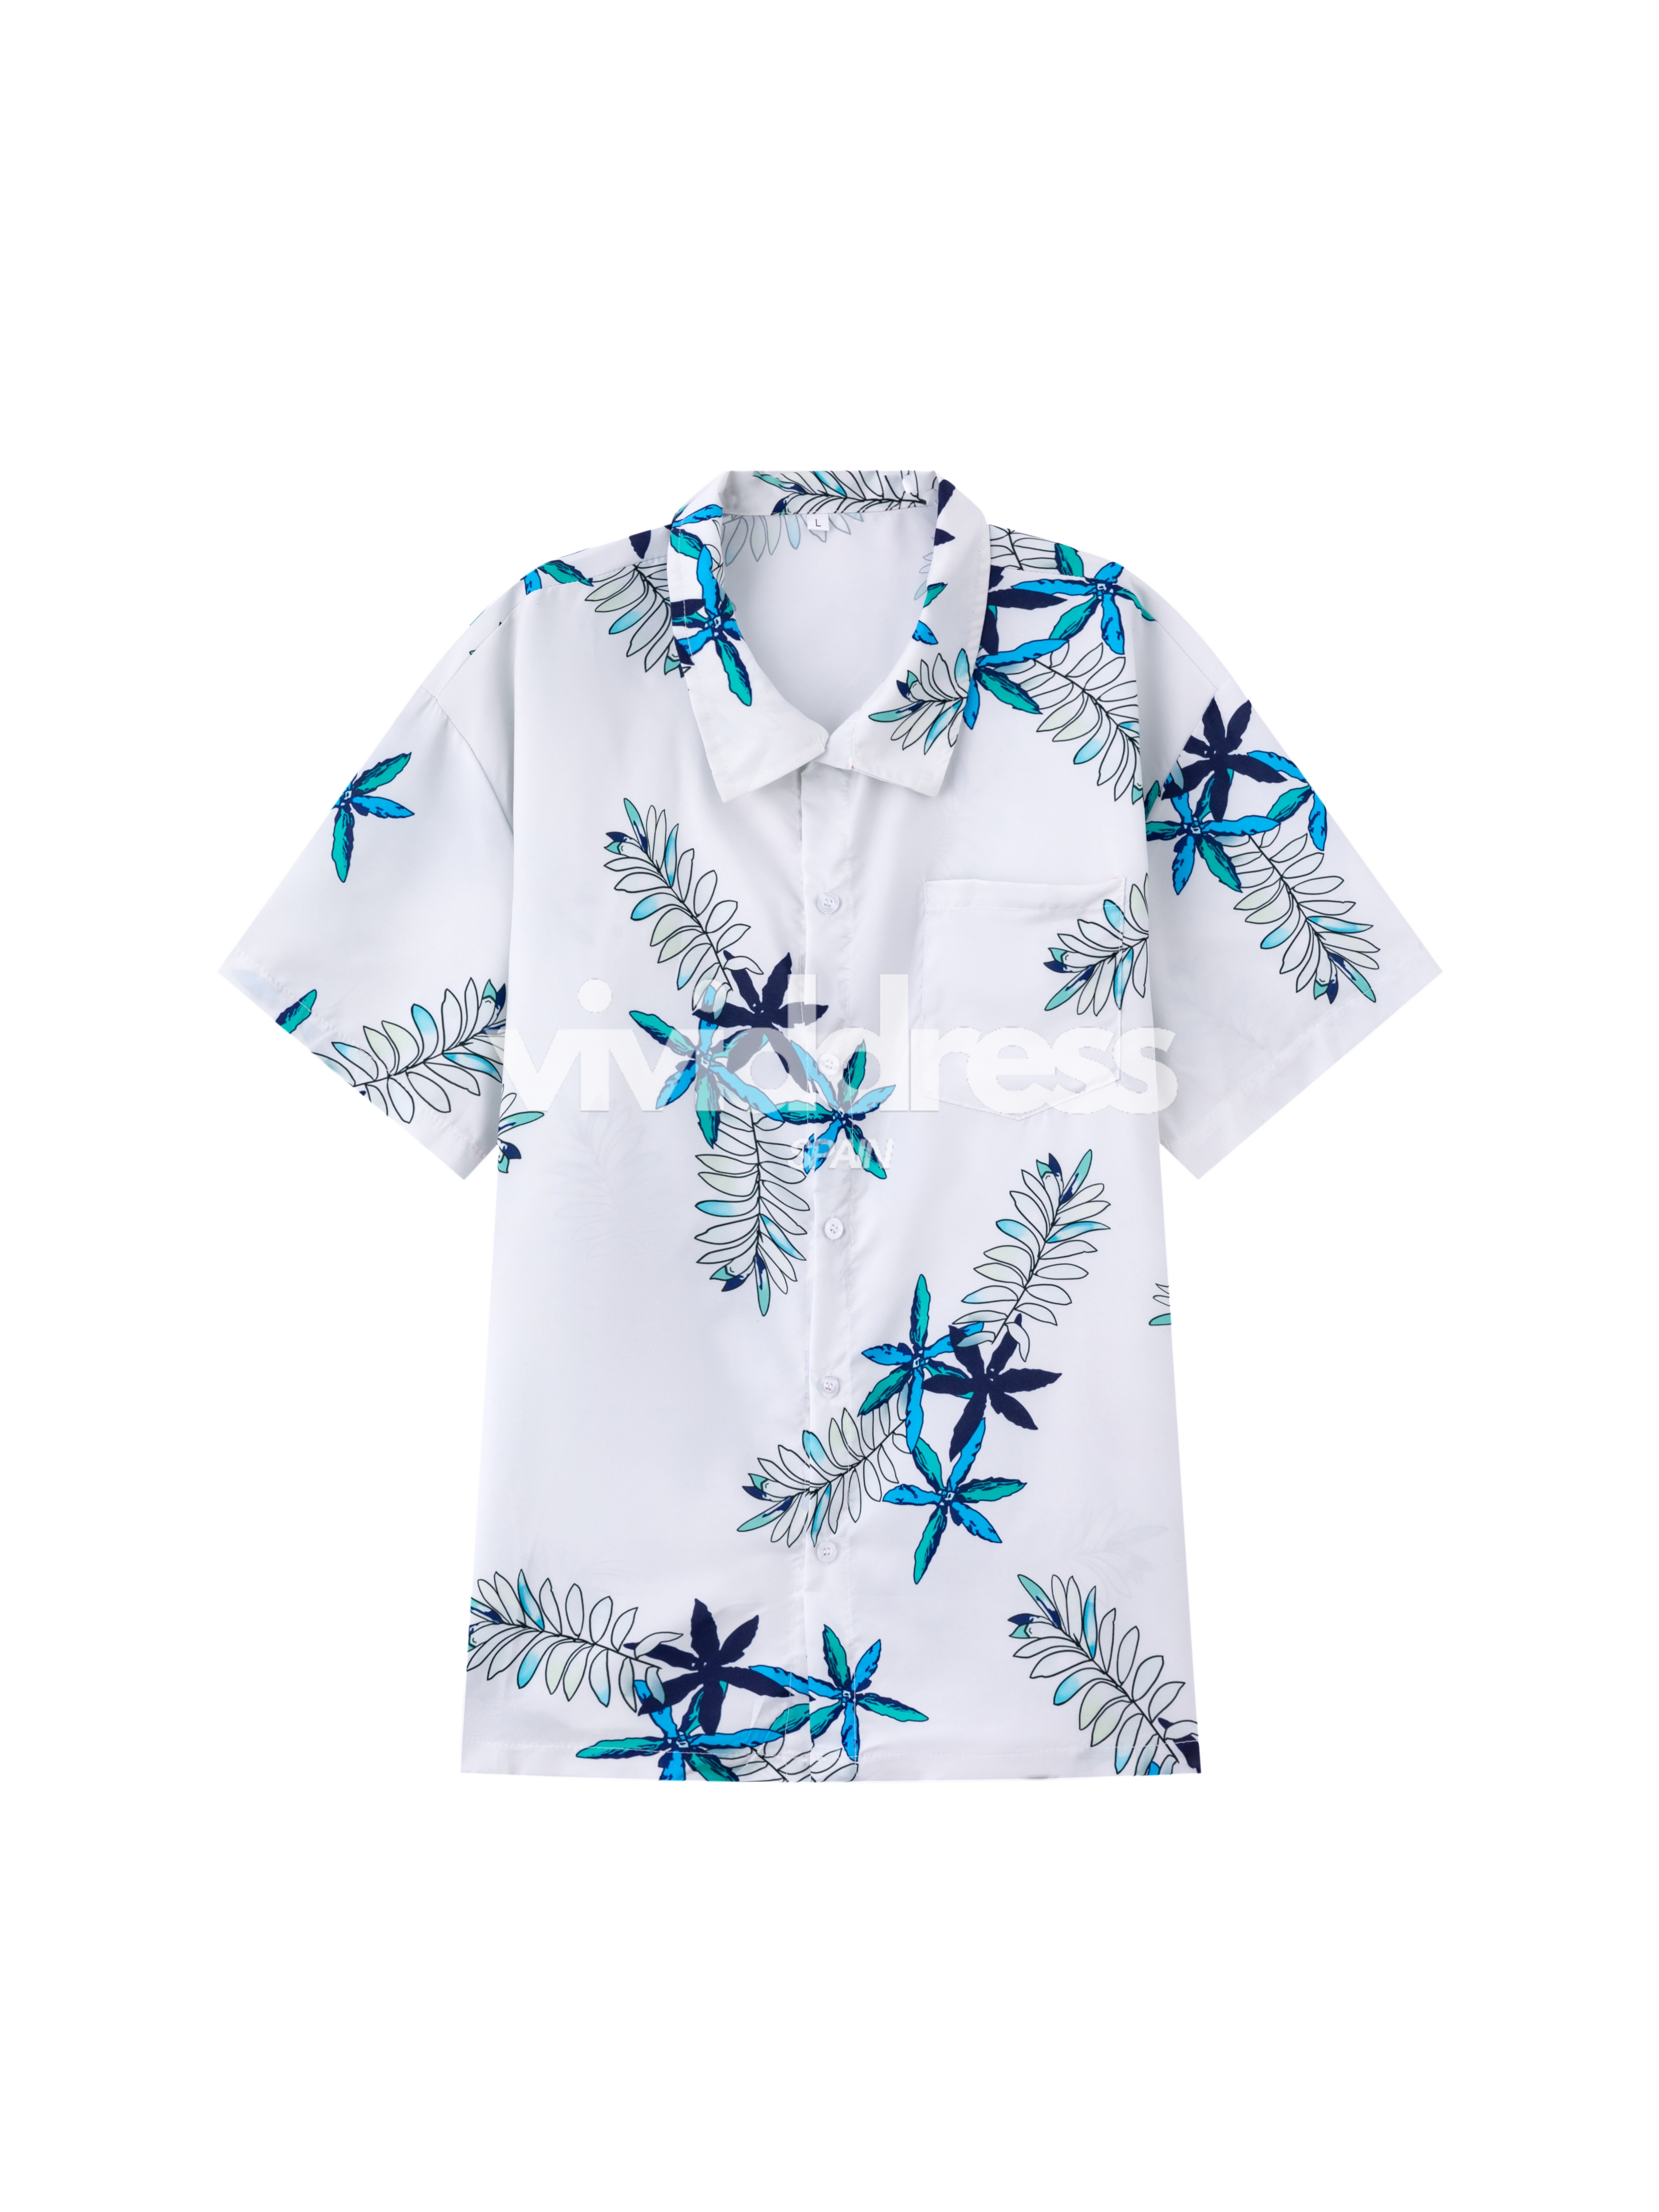 Men's Floral Print White Hawaiian Holiday Short Sleeve Shirt